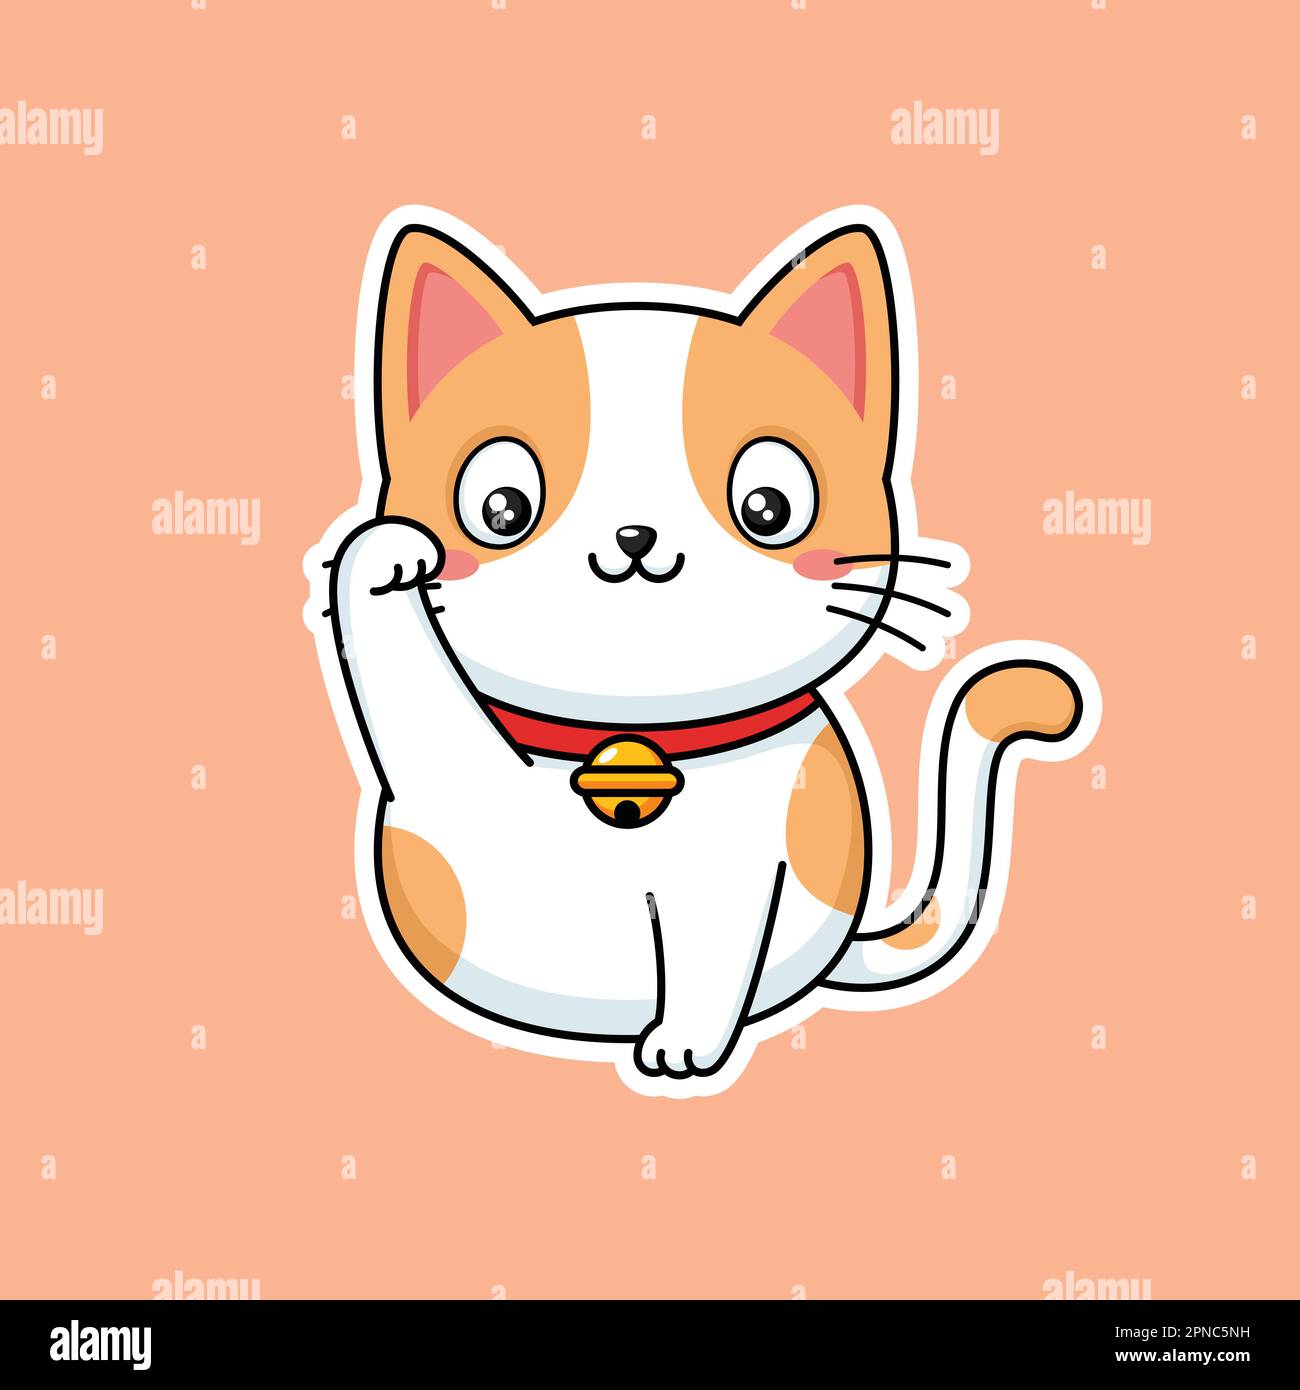 Niedliche Cartoon Kitty Cat Premium Vektorgrafik Im Sticker-Stil Stock Vektor